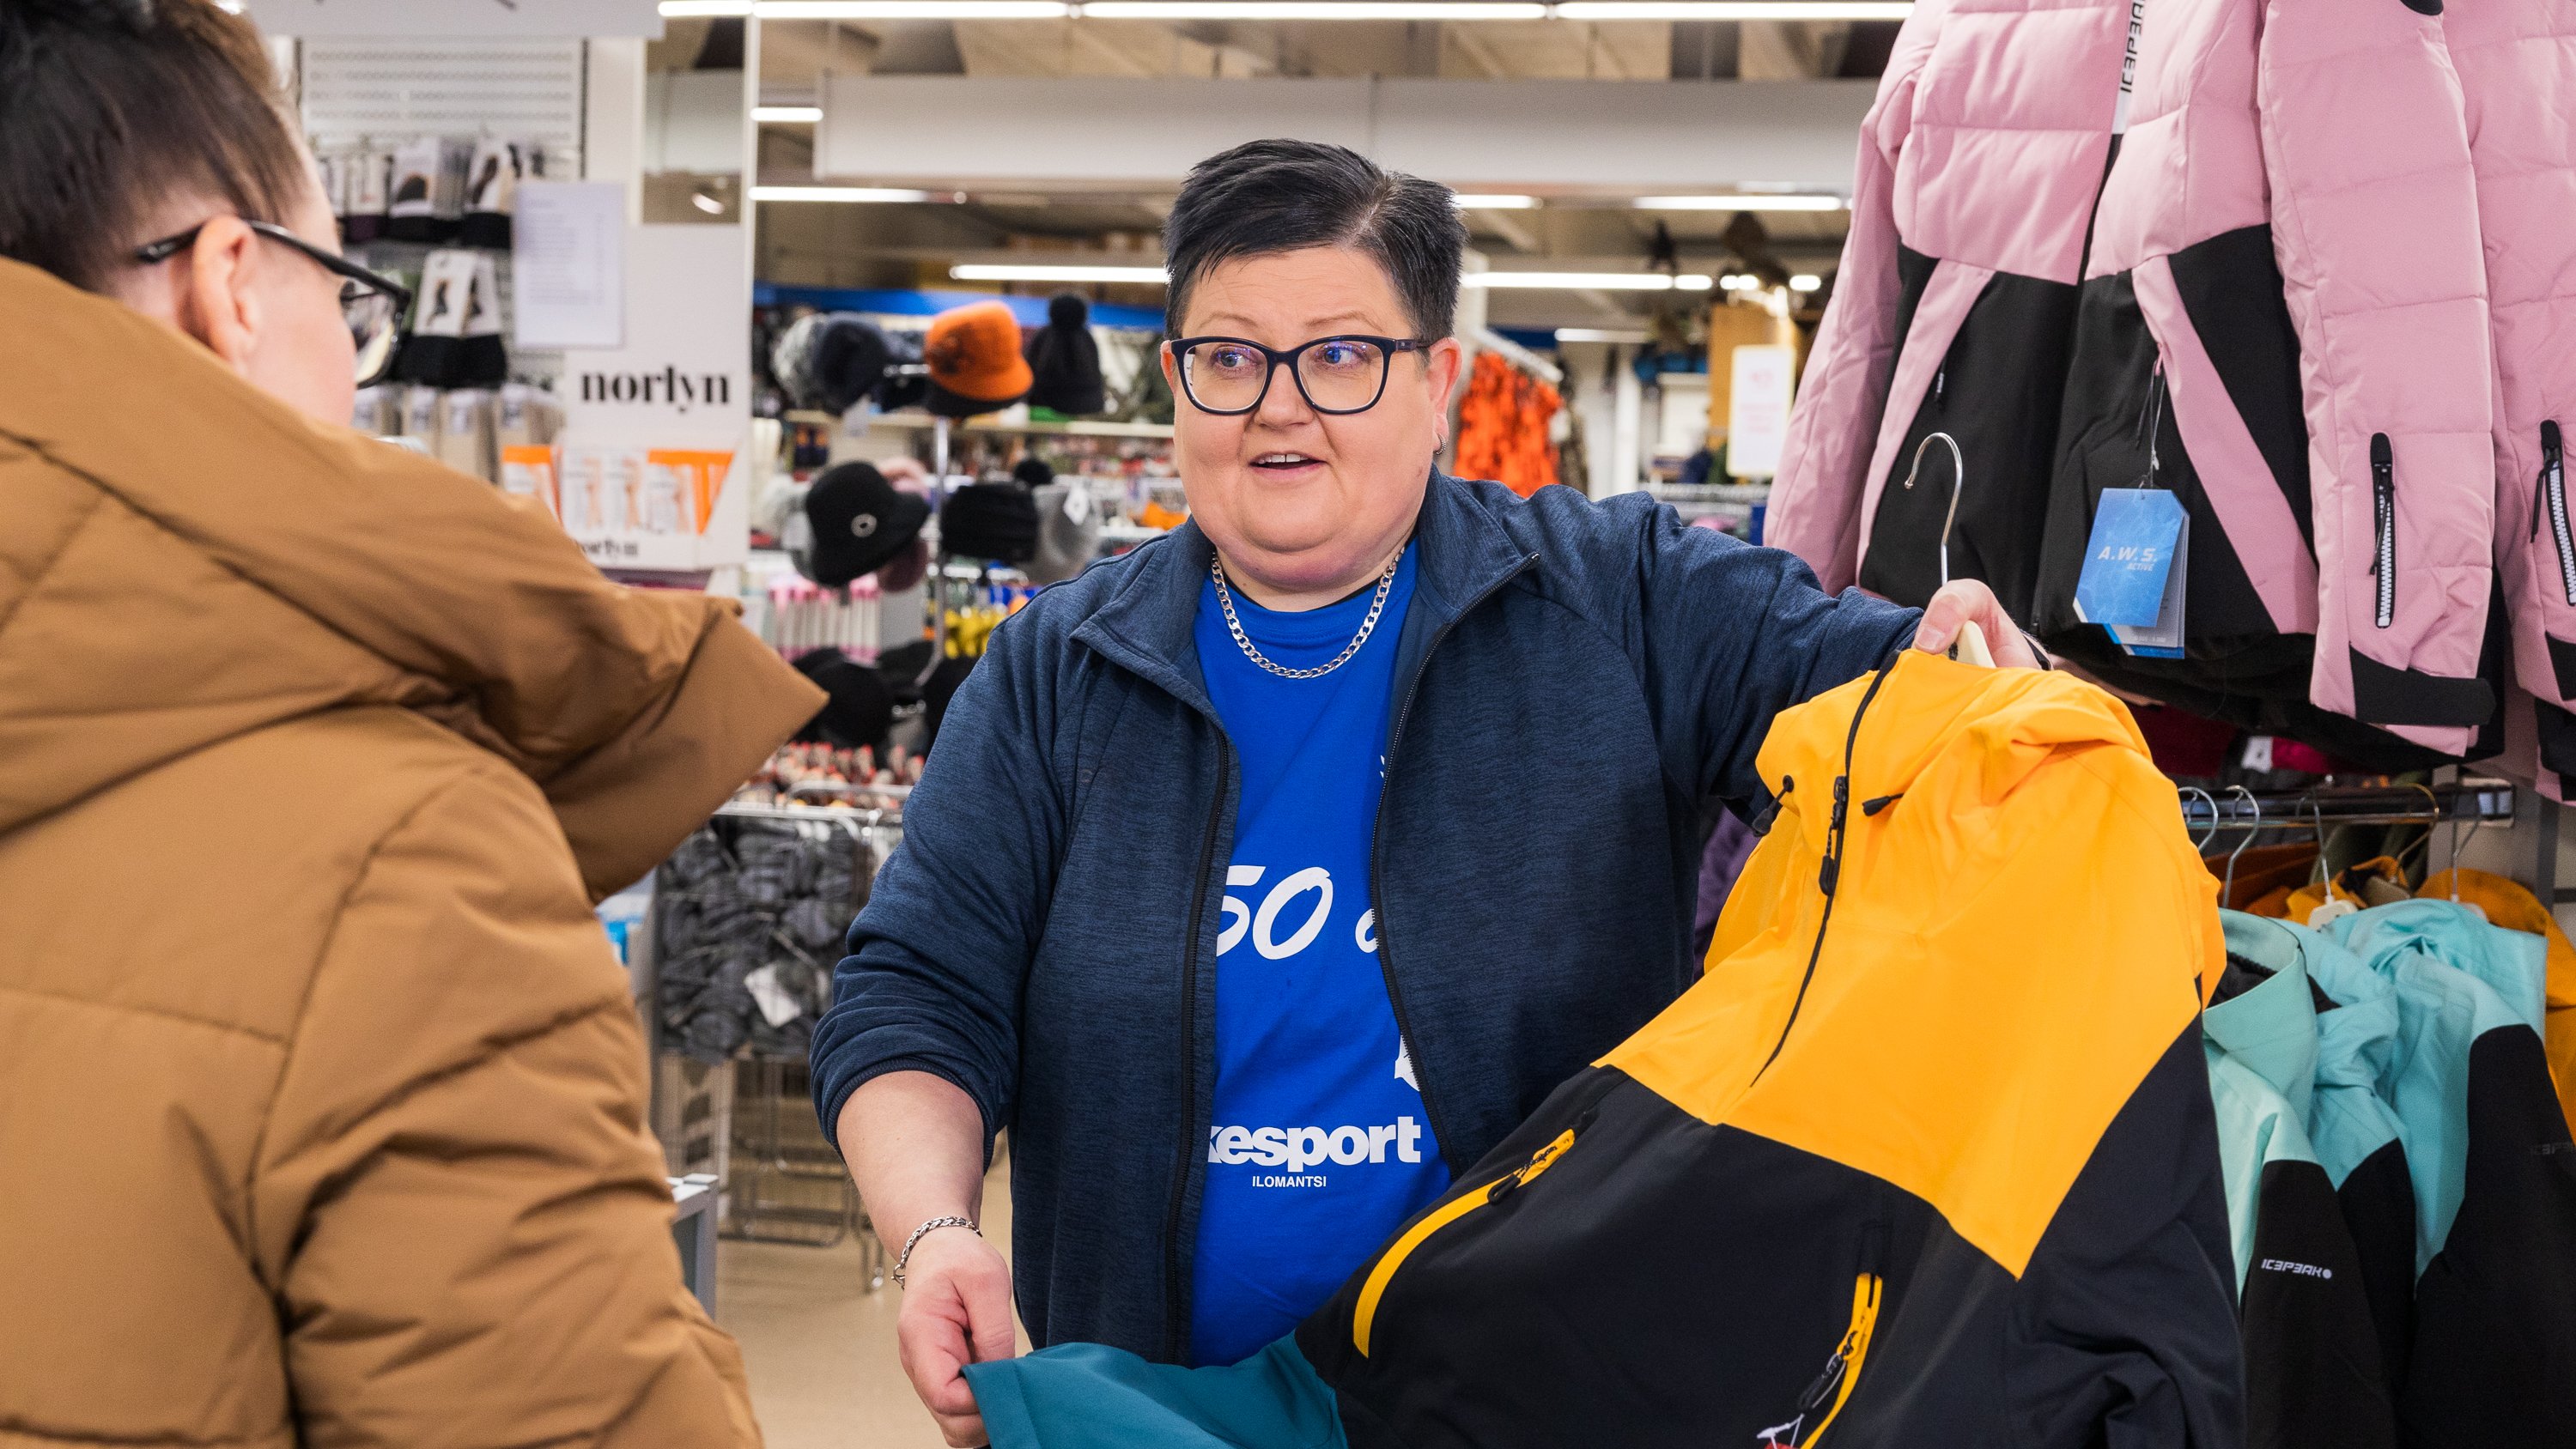 The entrepreneur of Kesport Ilomantsi Heli Kortelainen presents a jacket to a customer | Business Joensuu, business services